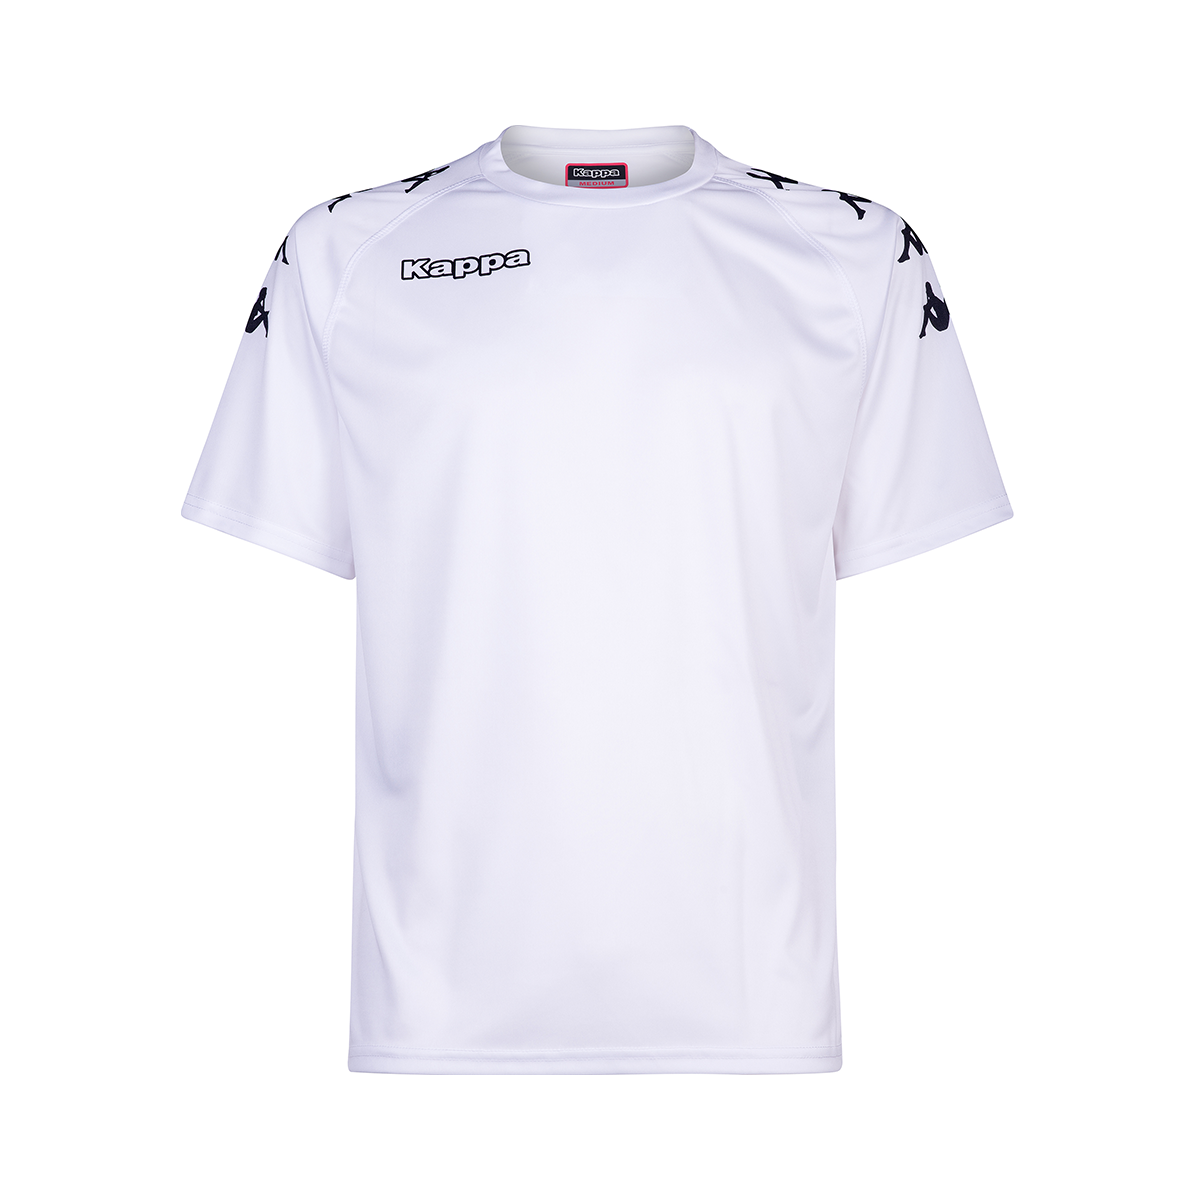 Camiseta Castolo Blanco Niños - Imagen 3